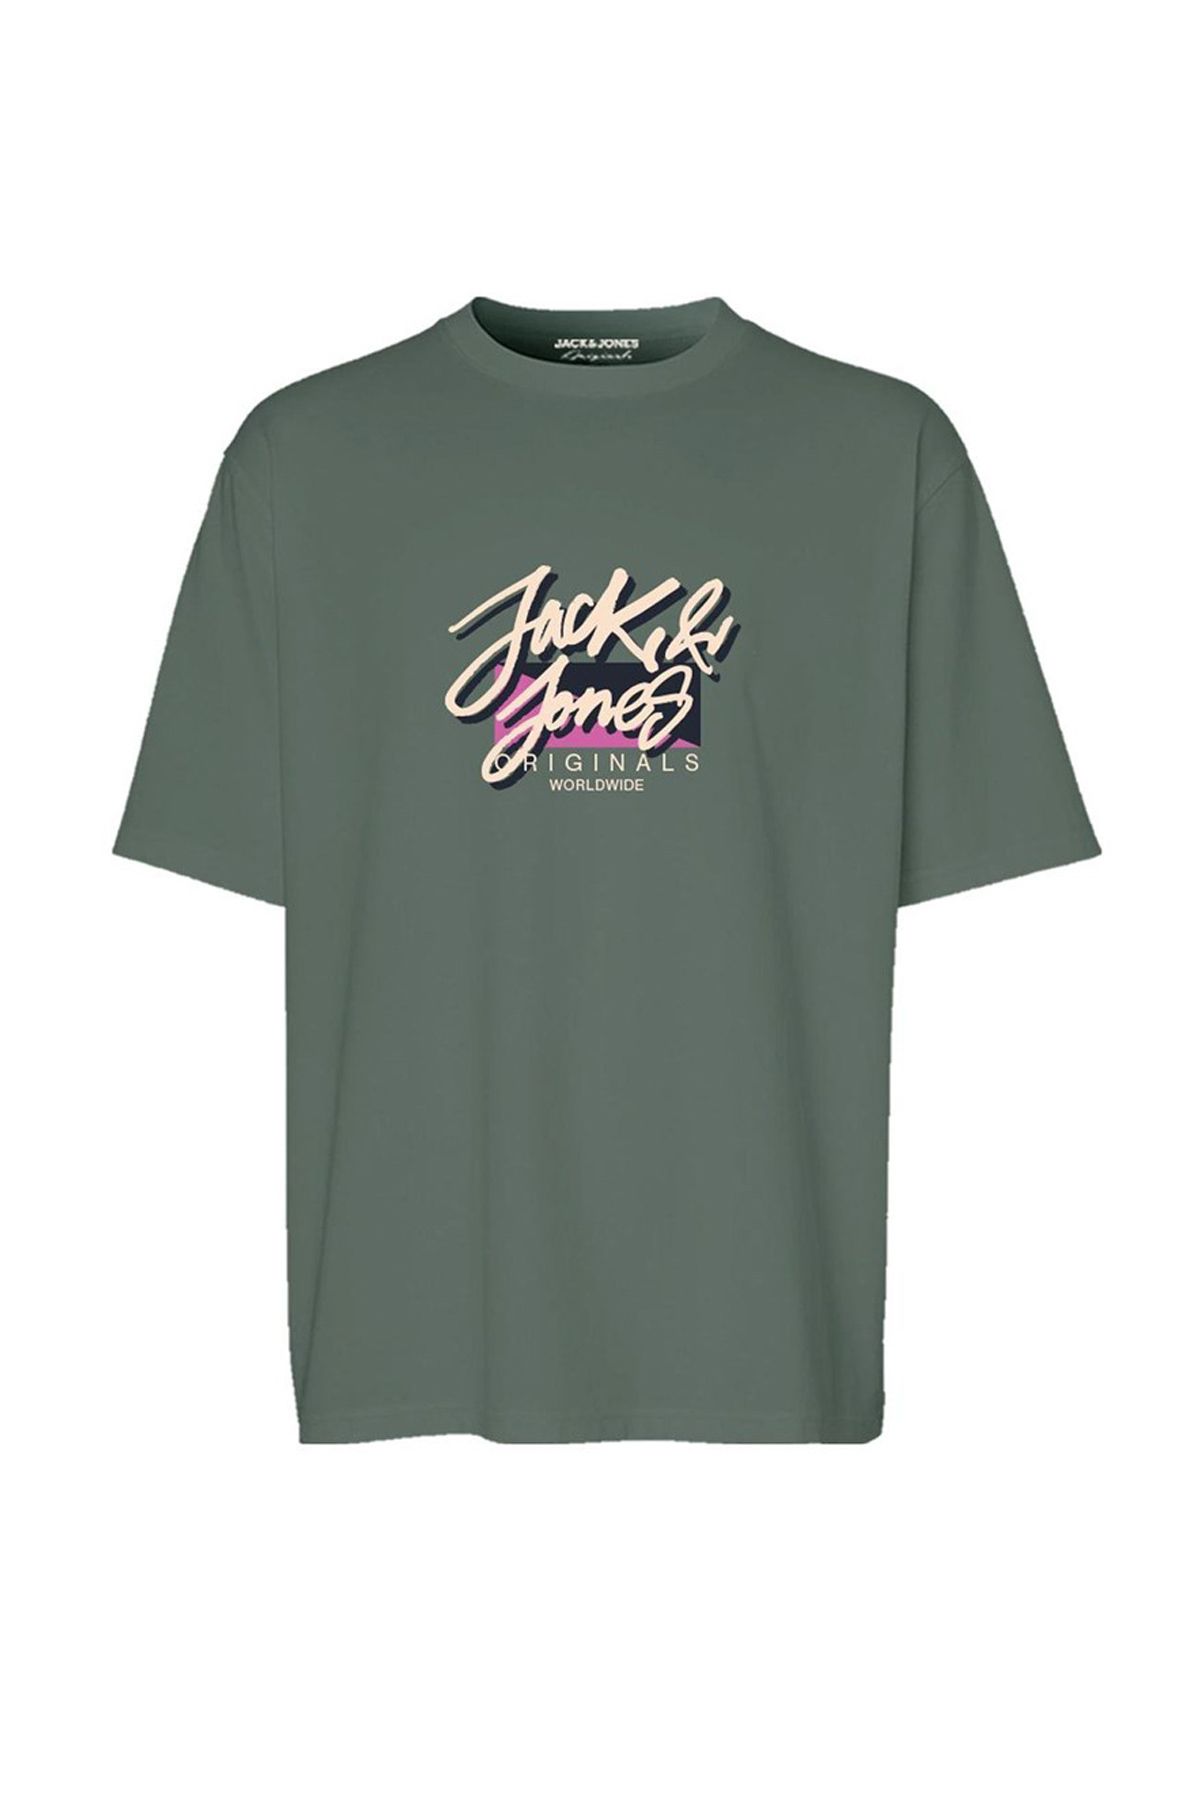 Jack & Jones JORTAMPA TEE SS CREW NECK Haki Erkek Kısa Kol T-Shirt